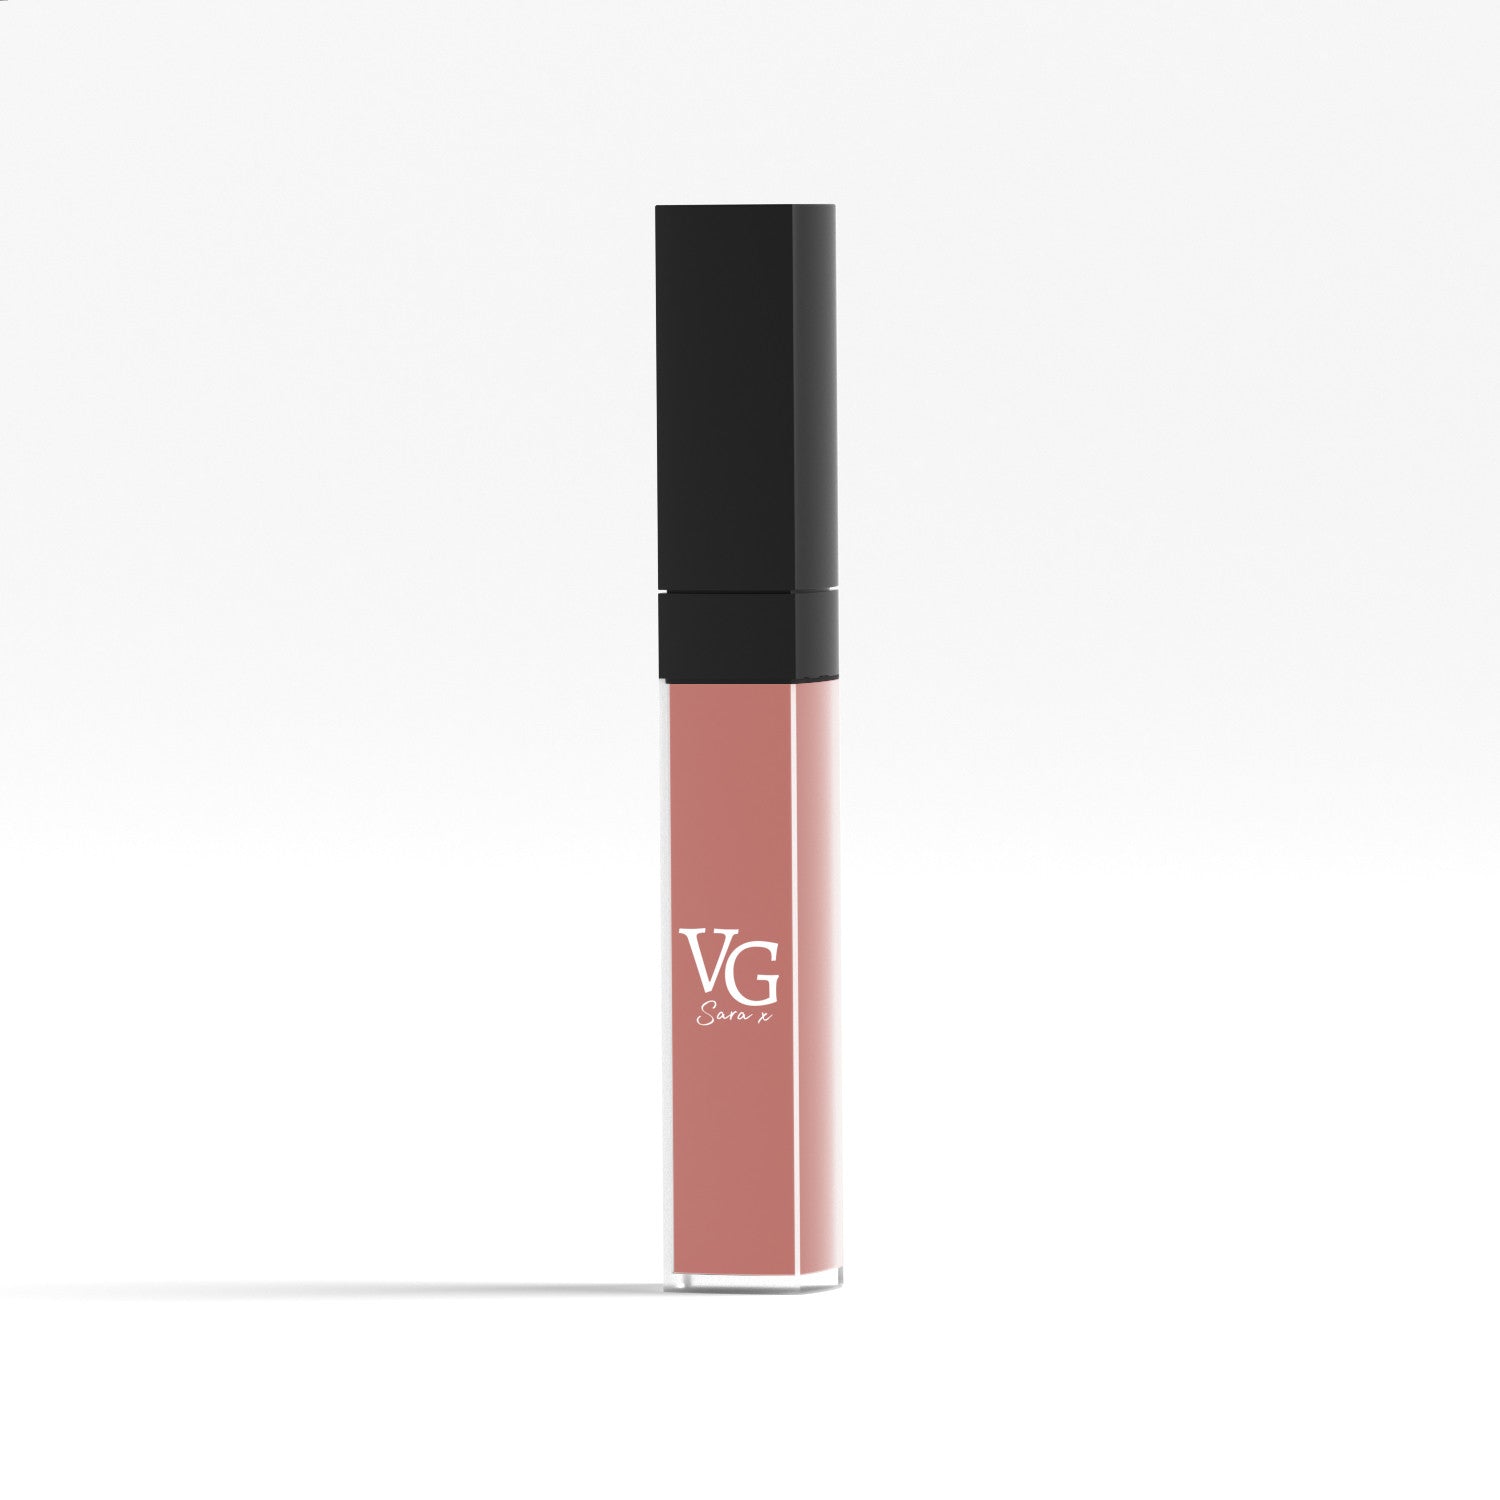 Pink VG liquid lipstick with a matte finish